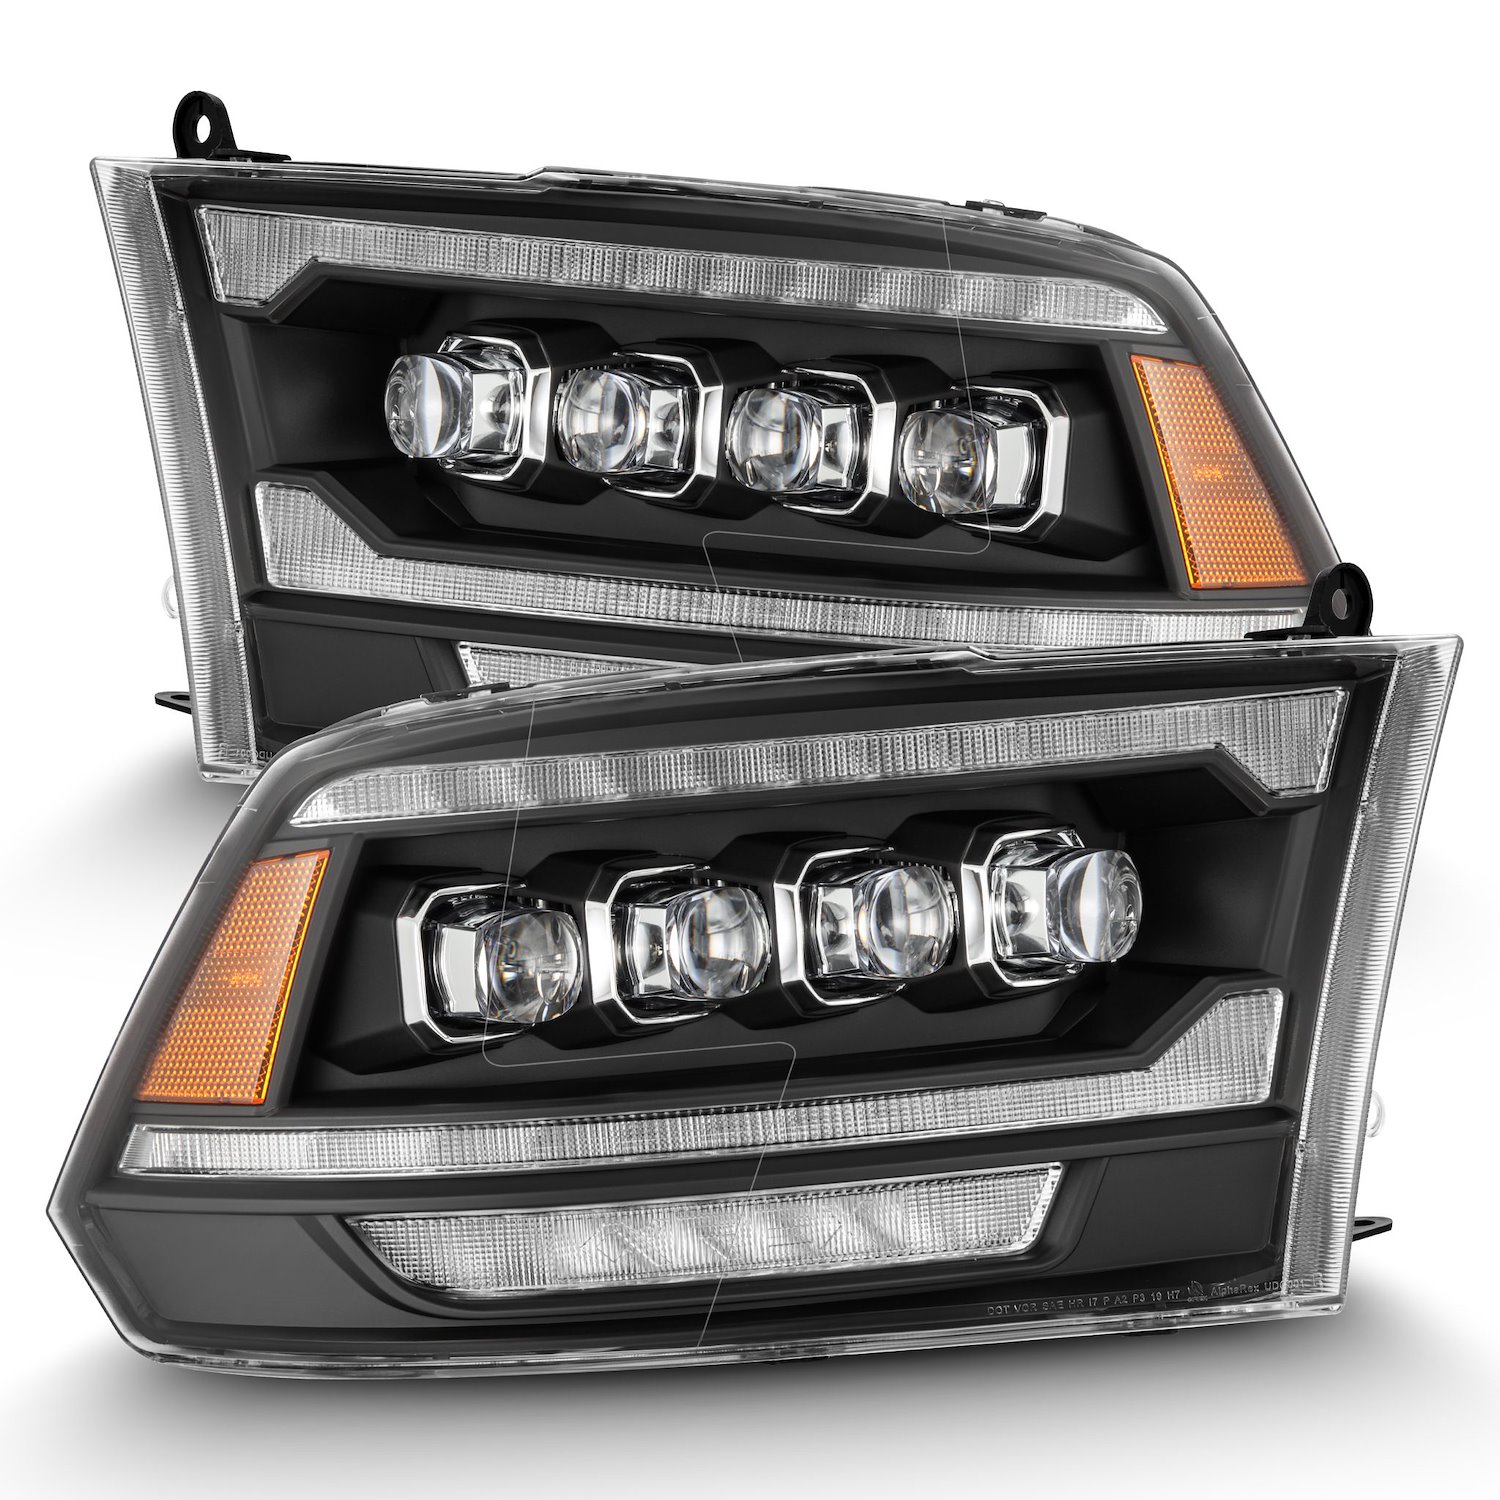 880556 NOVA-Series LED Projector Headlights for 2009-2018 Dodge/RAM 1500/2500/3500 - Chrome